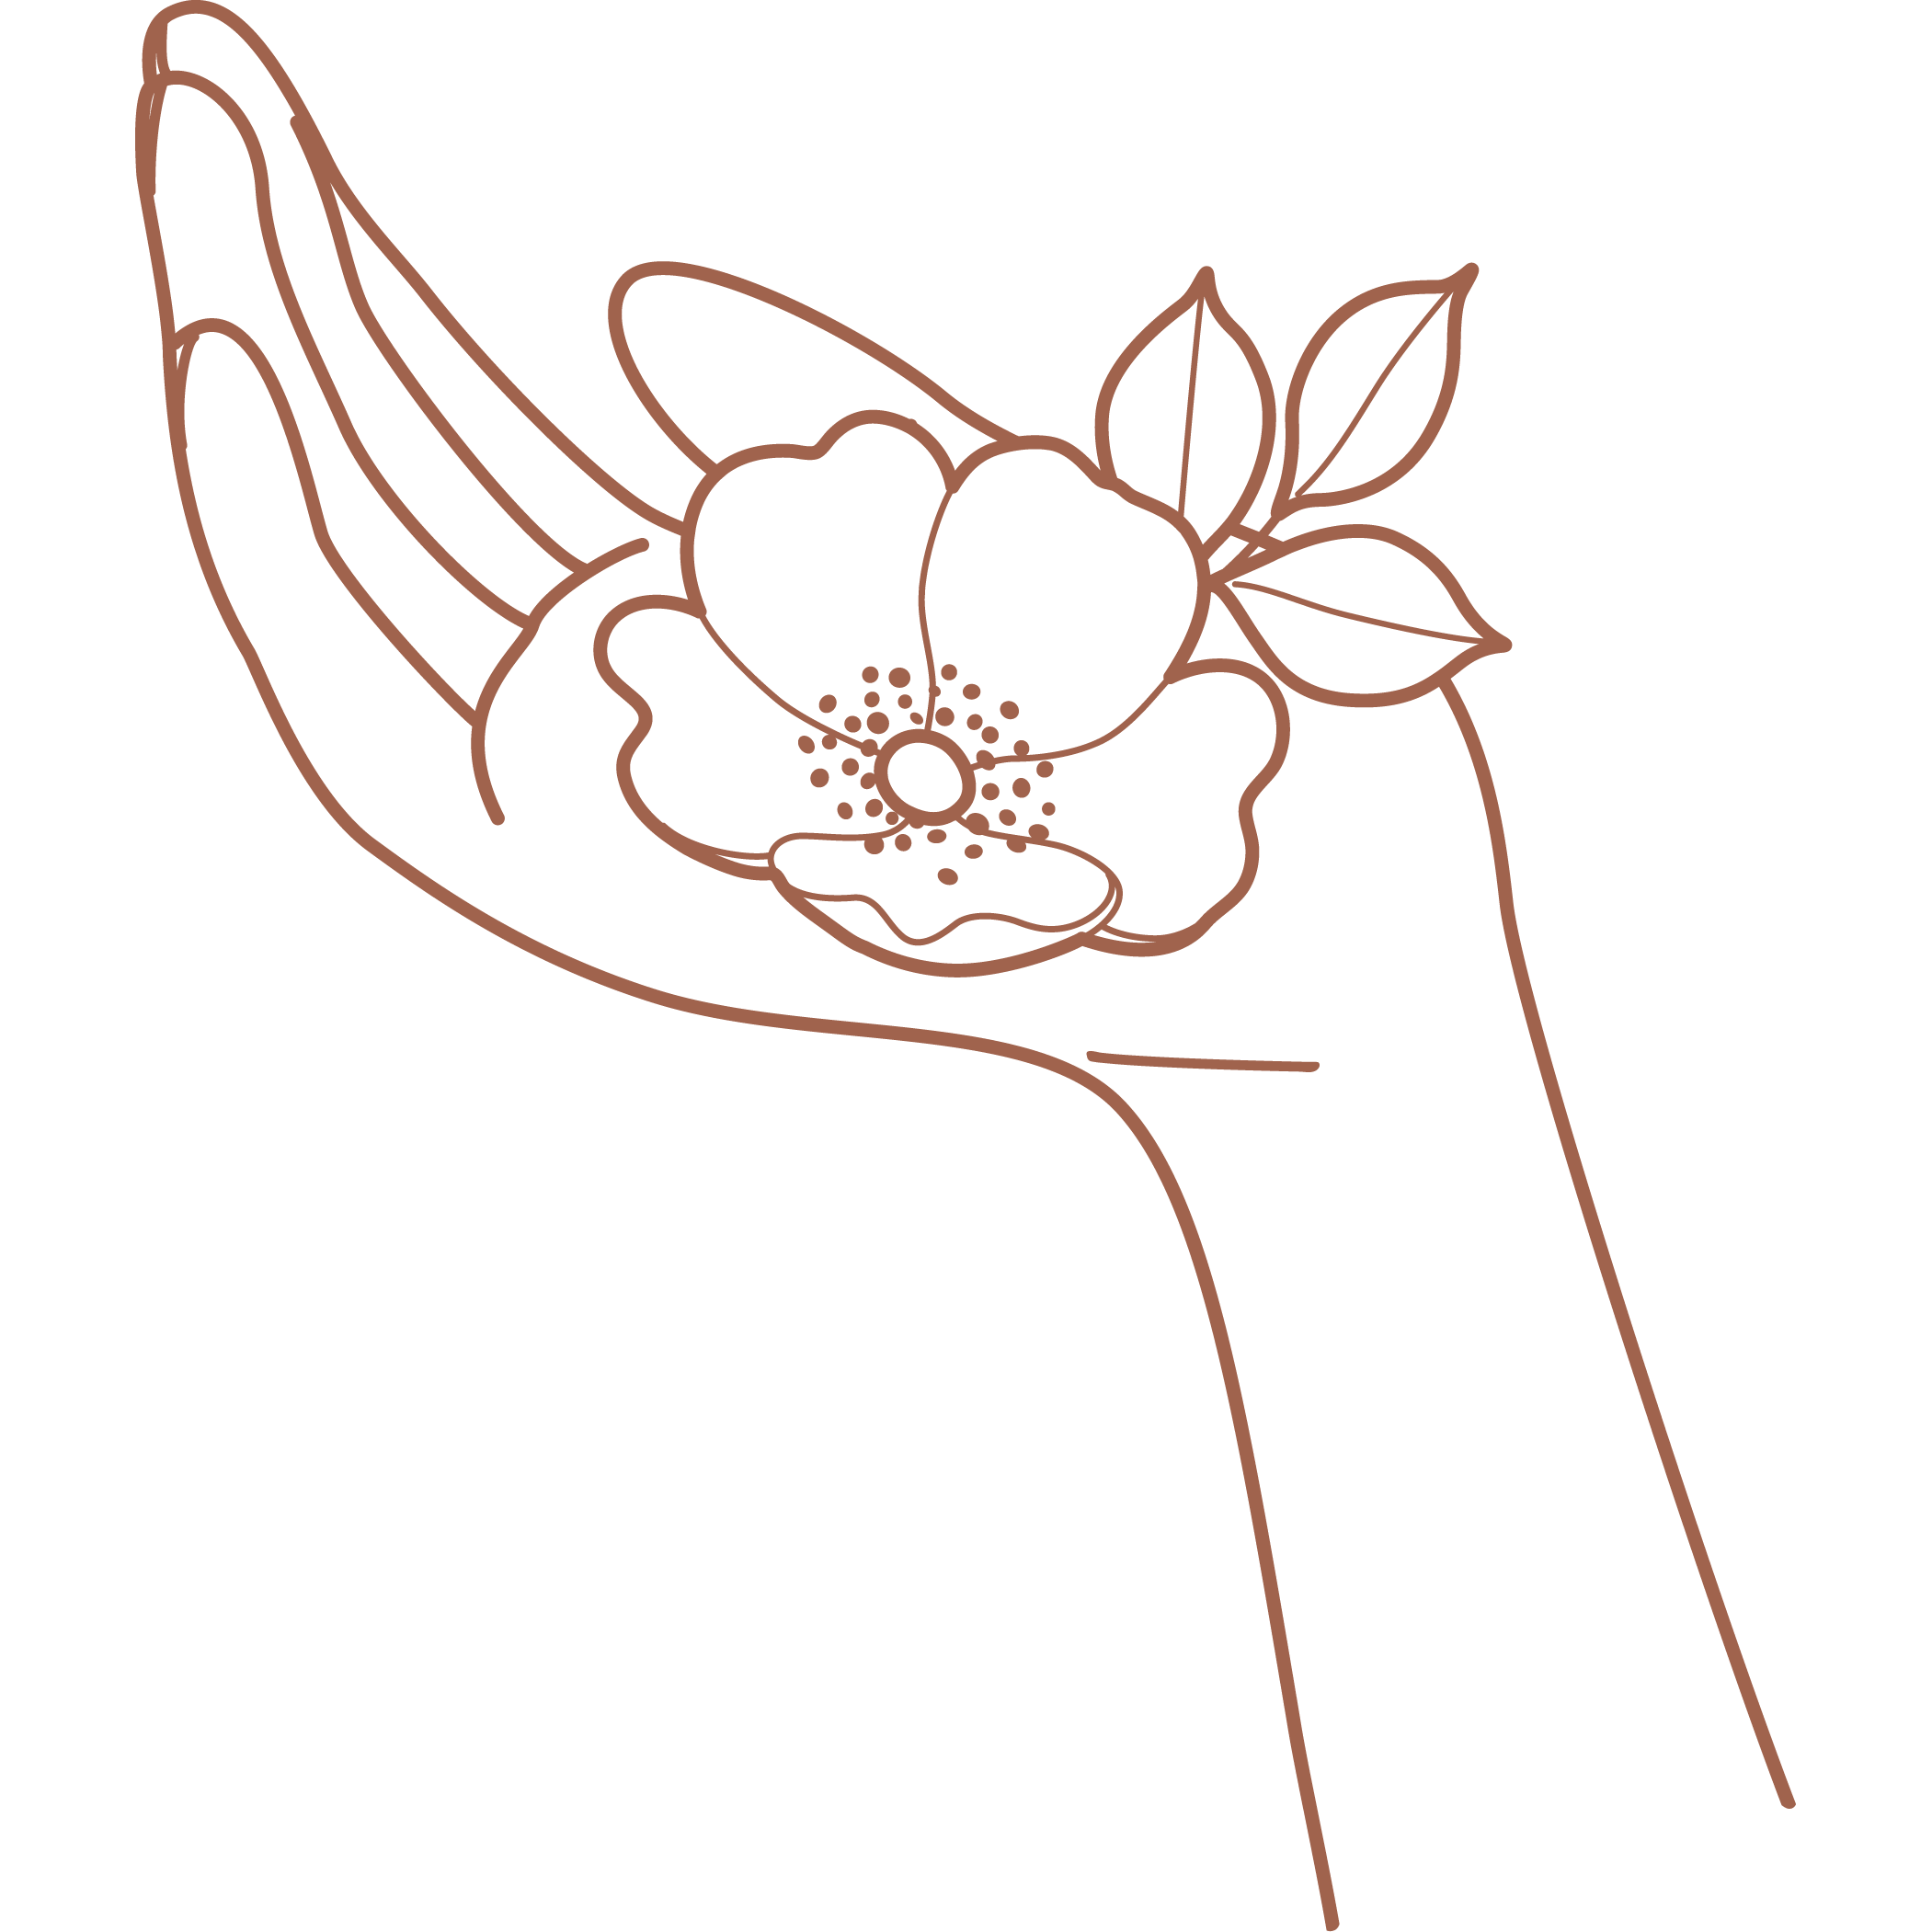 A sketch of an open hand holding a flower petal gently